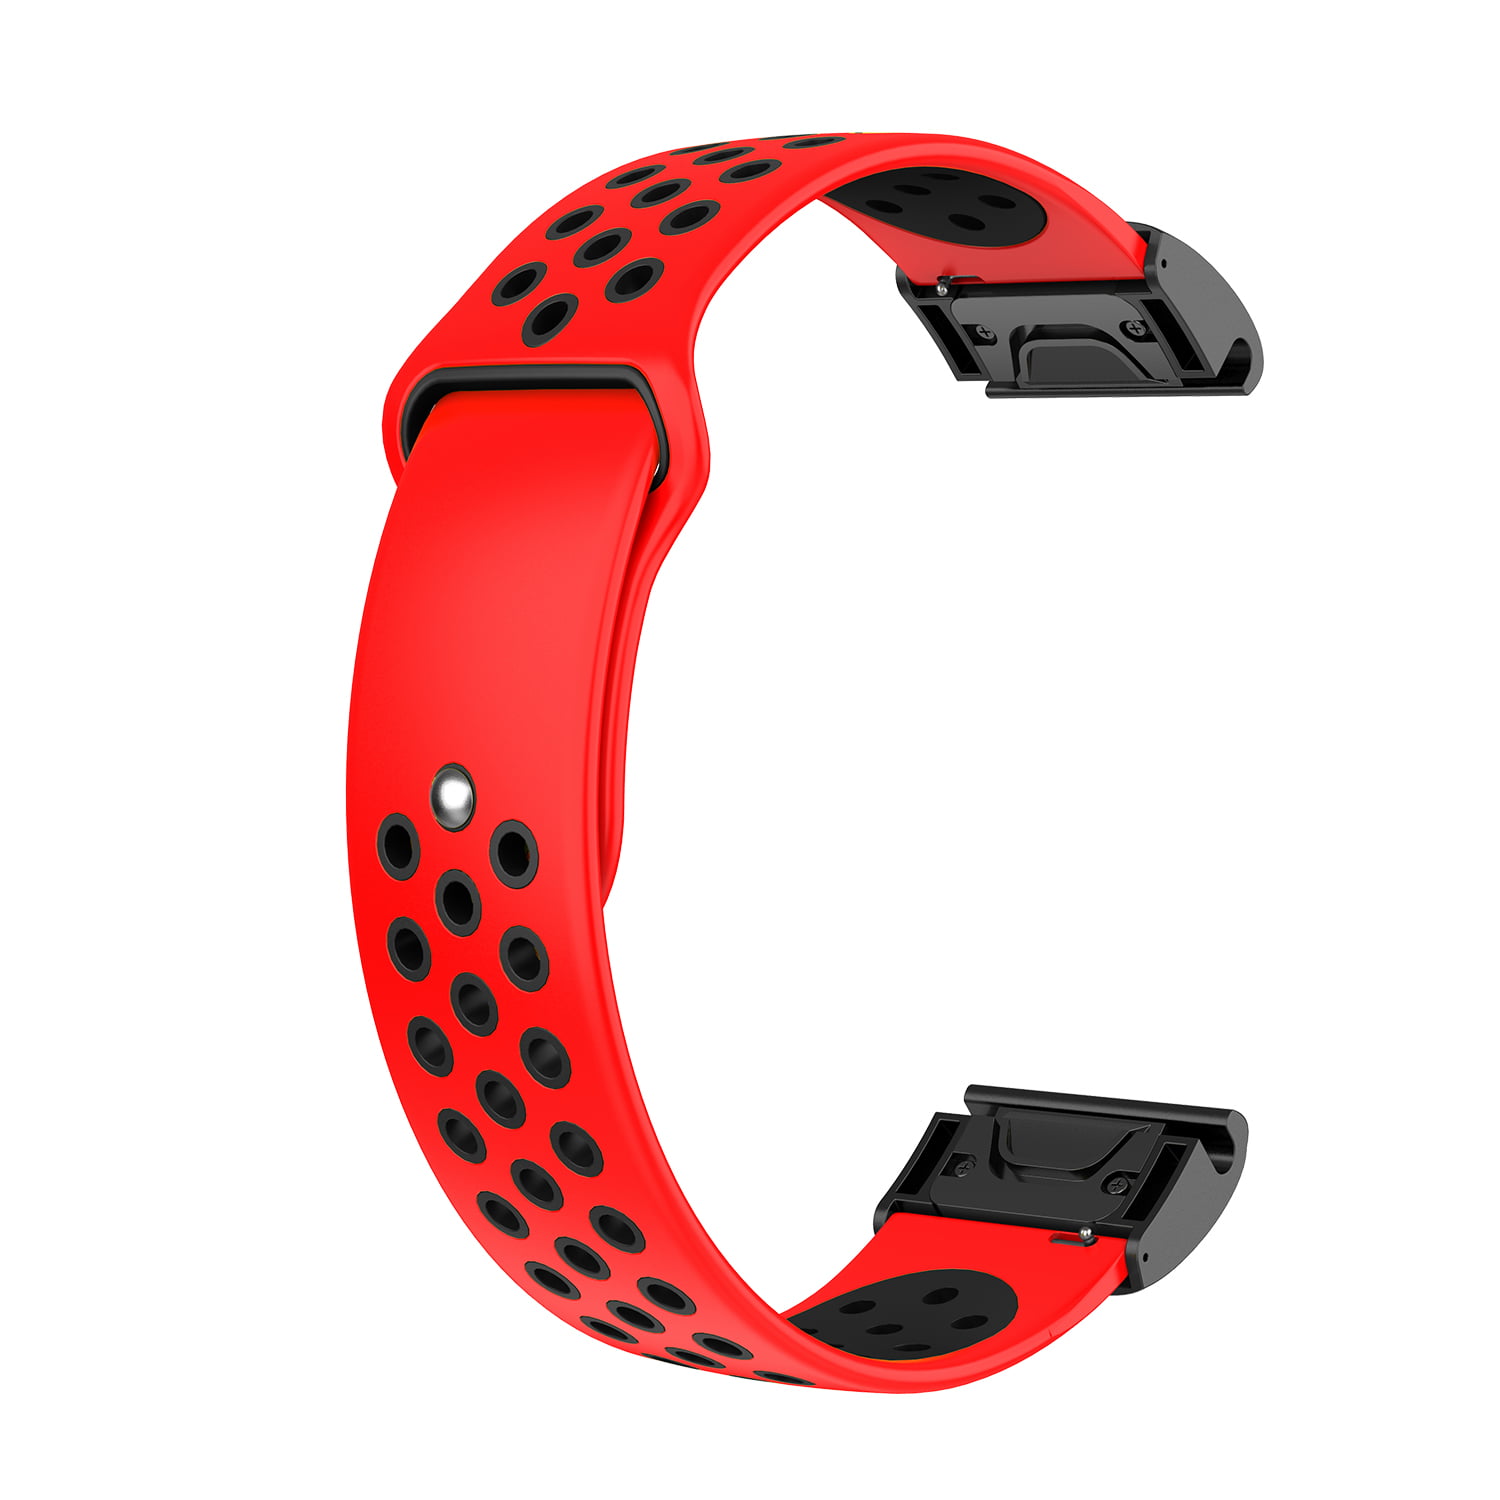 Red/Black Silicone Sports Watch Band For Garmin Fenix 5X / 5X Plus Fenix 3 / Fenix 3 HR - Walmart.com